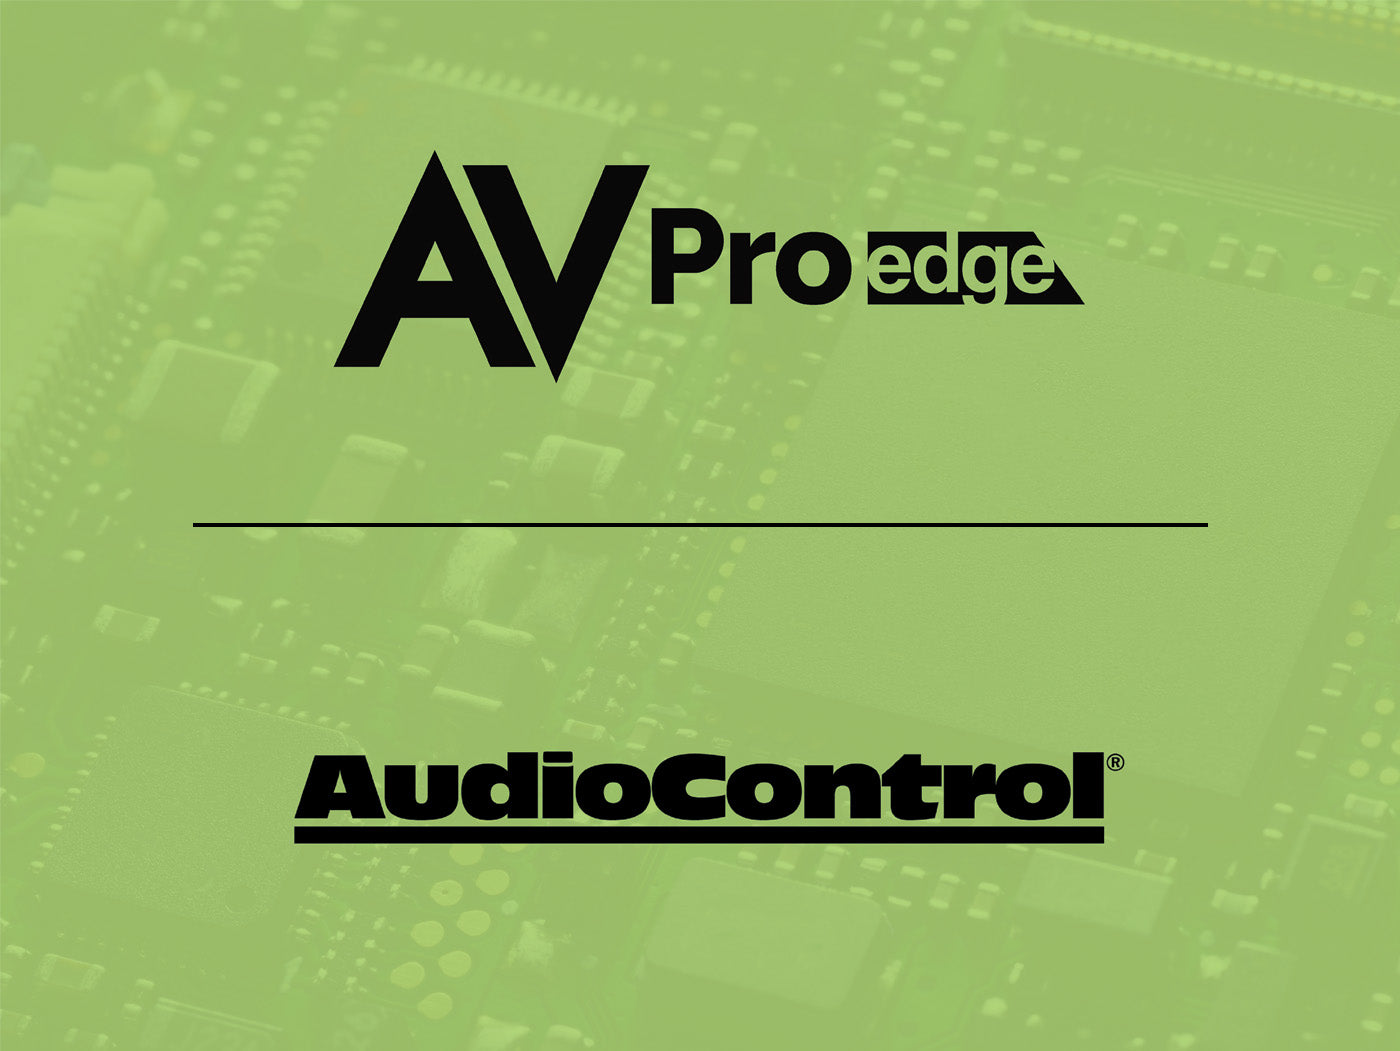 AudioControl – Six Months as an AVPro Company